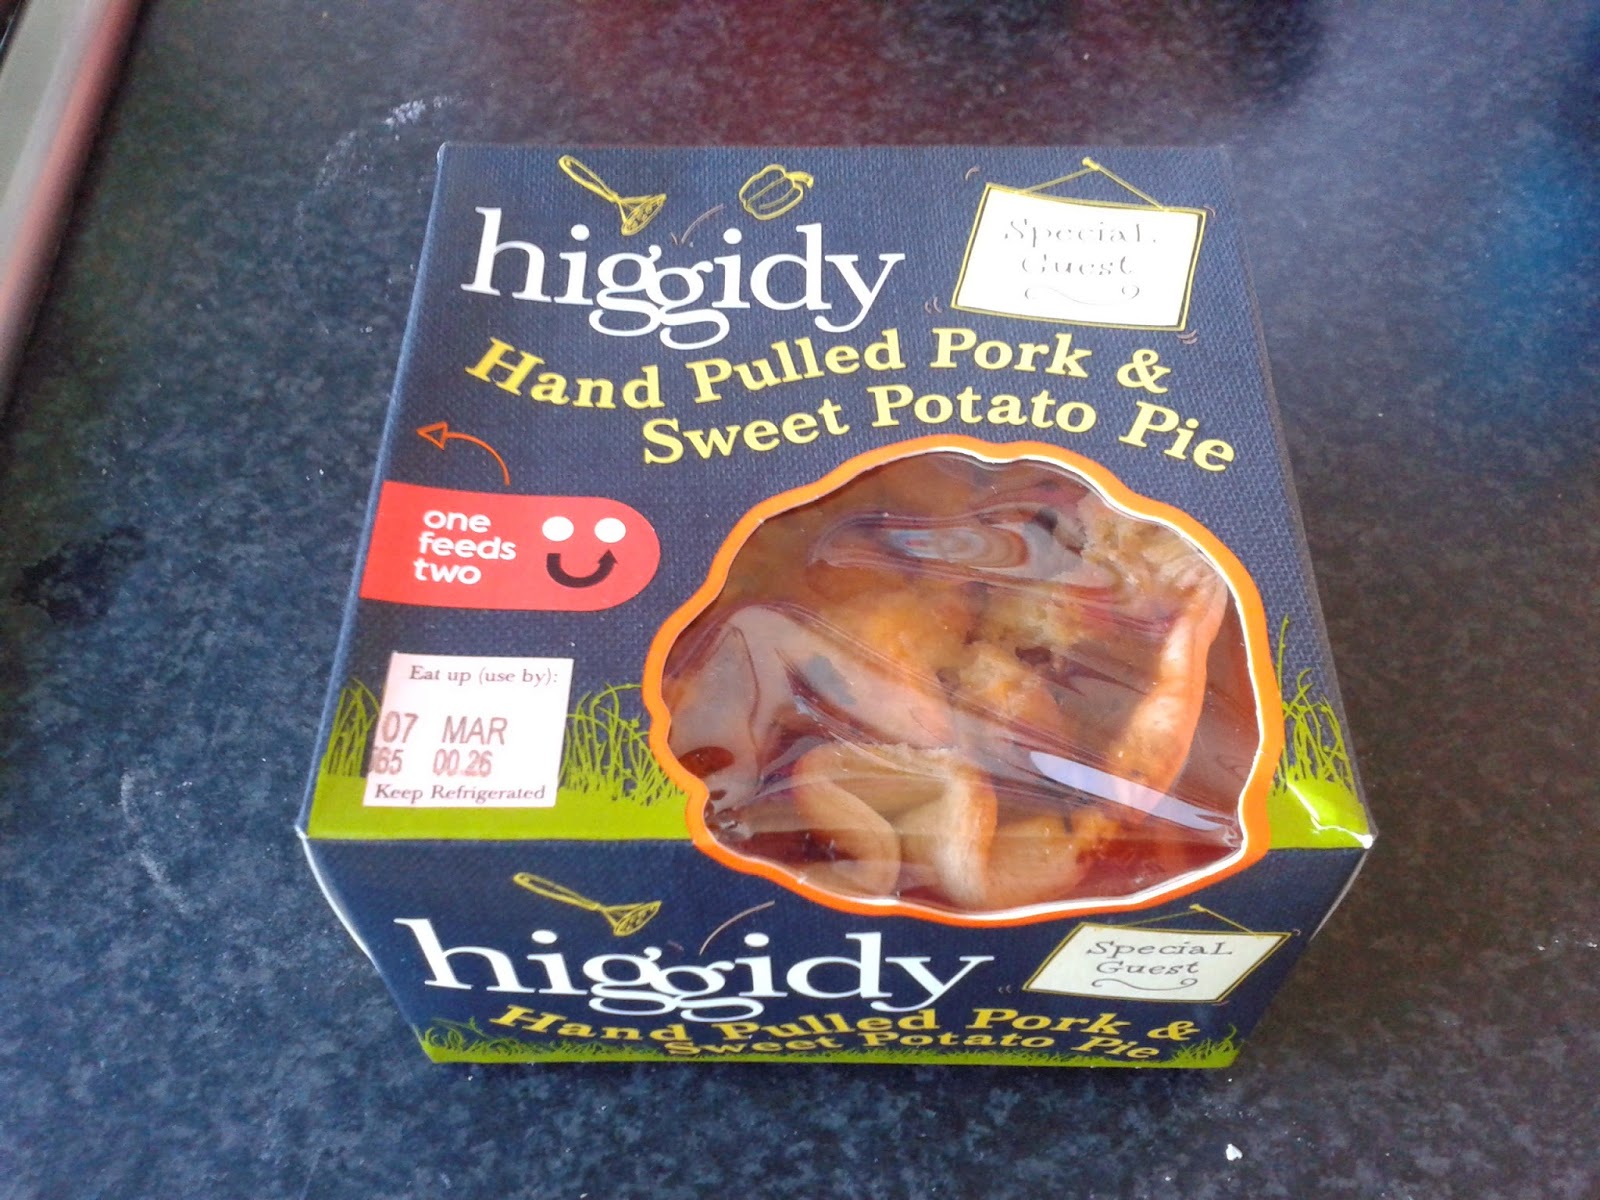 Higgidy Pulled Pork and Sweet Potato Pie